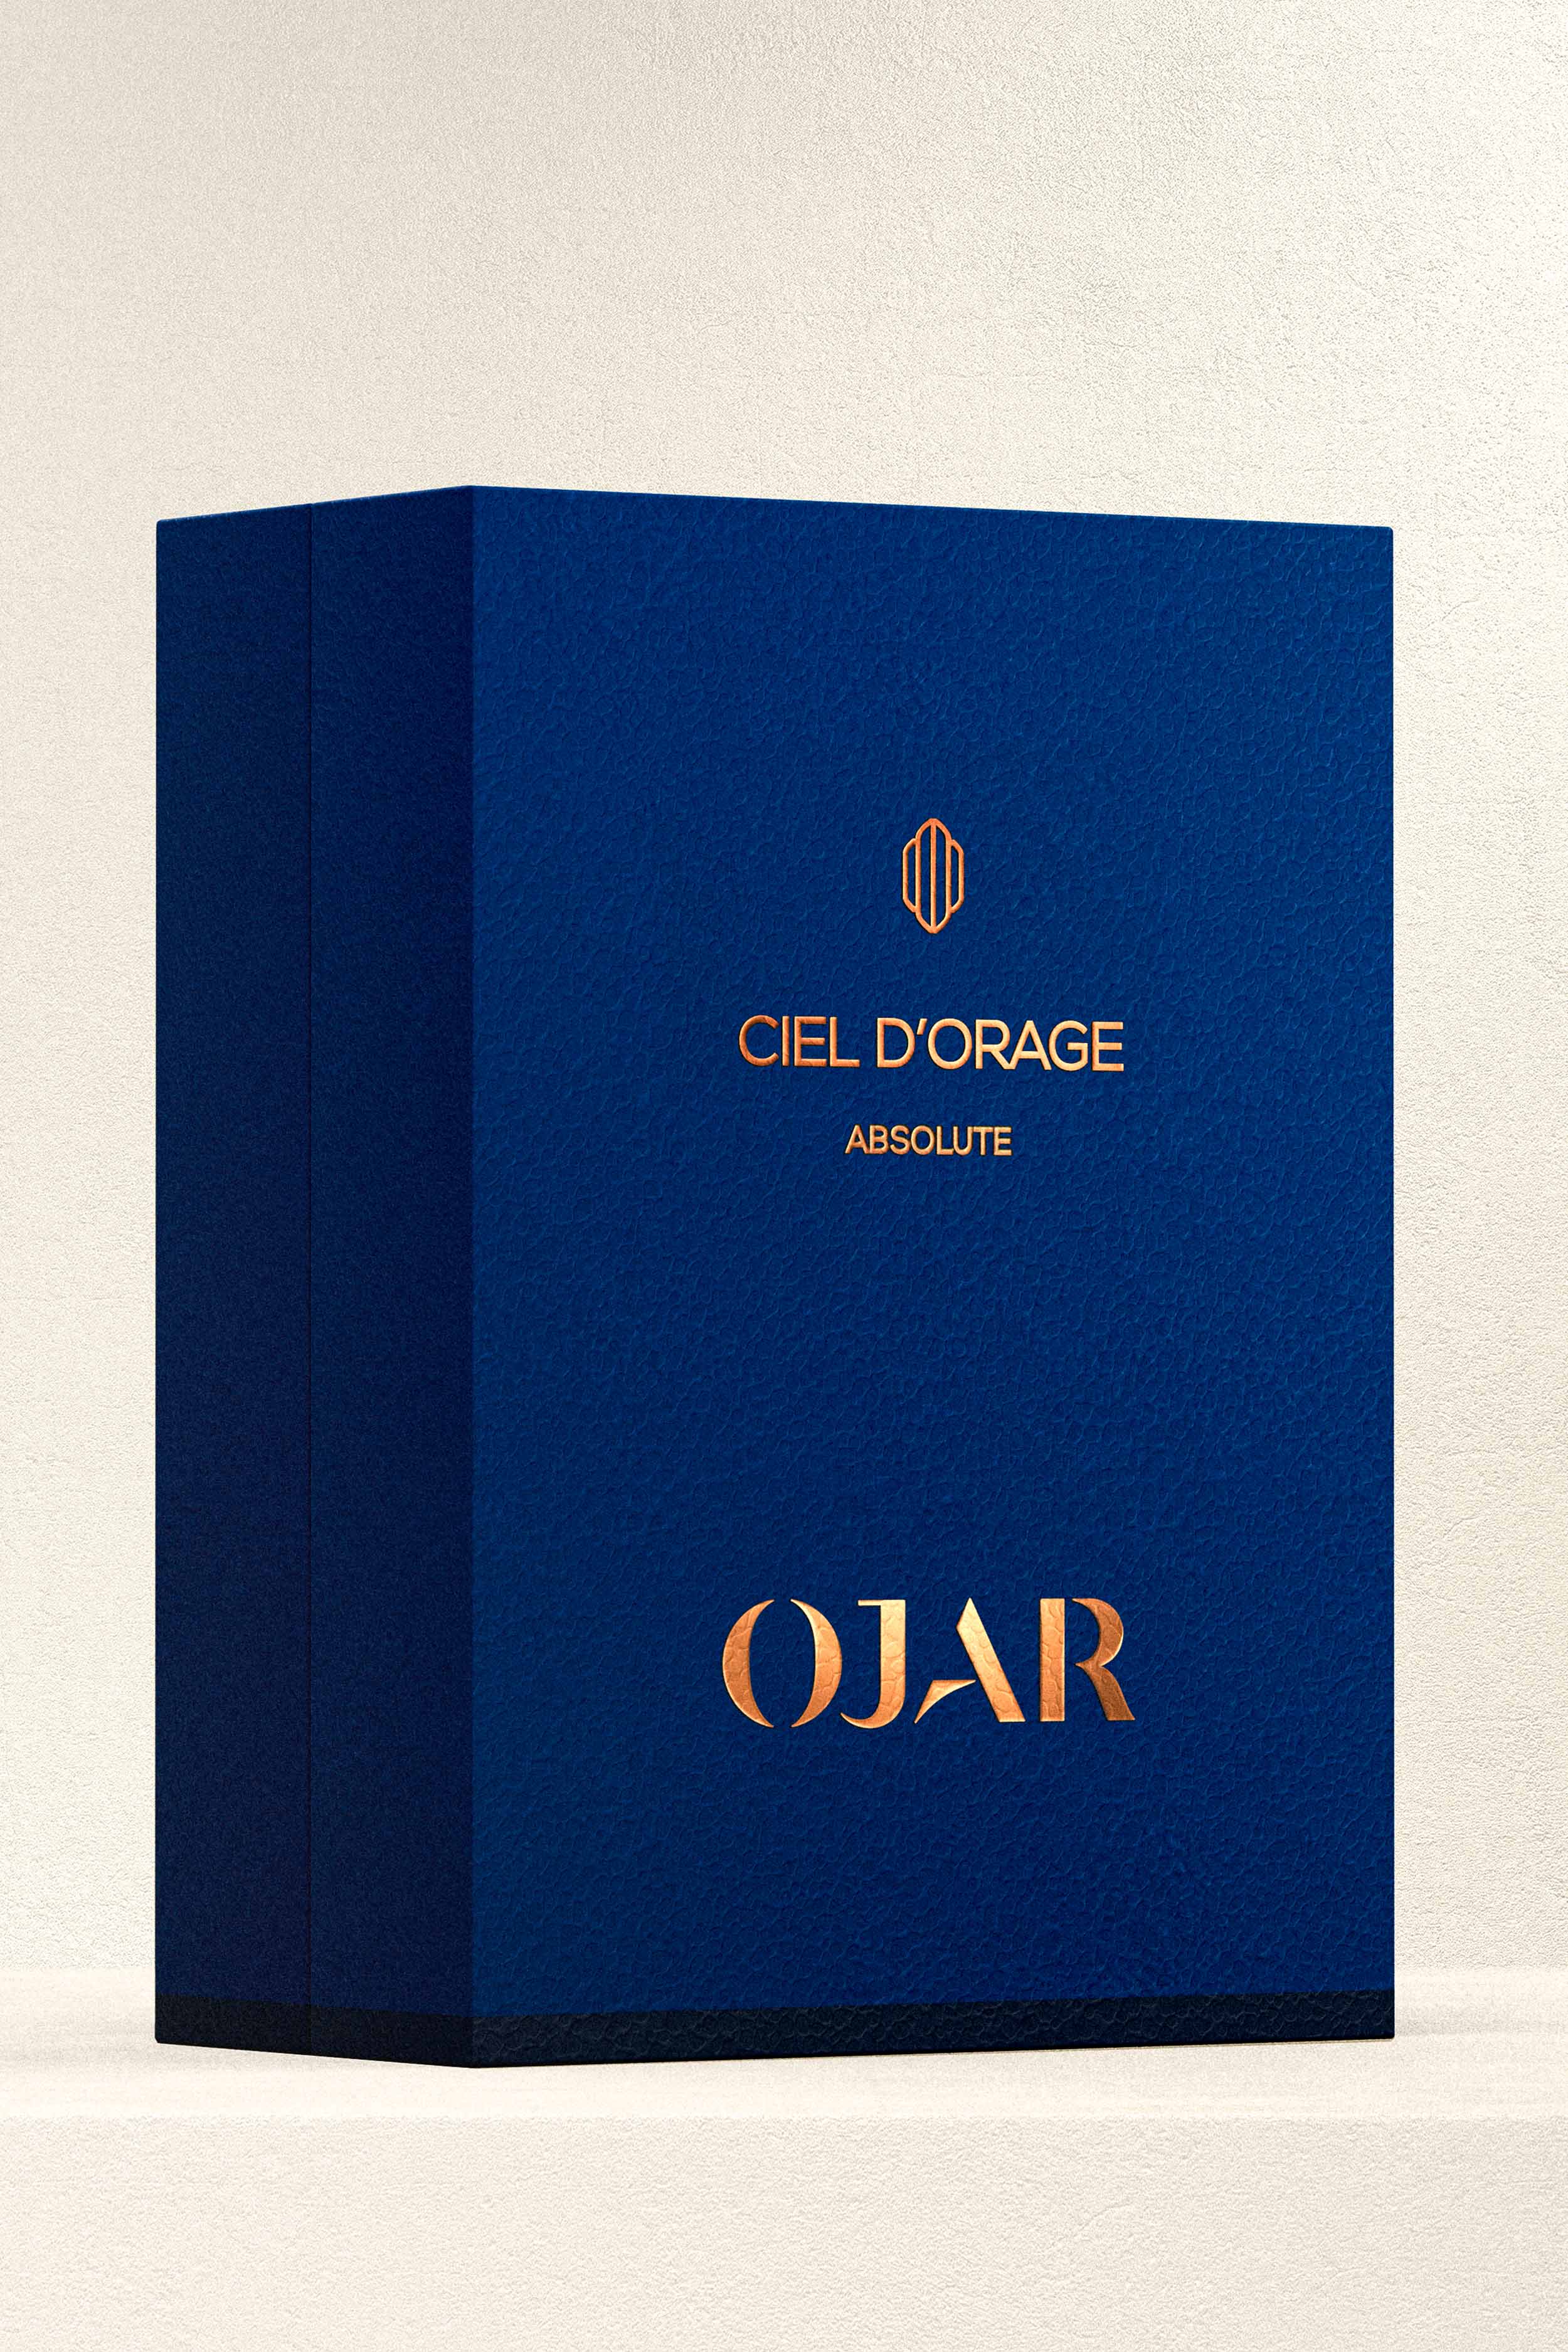 OJAR Absolute Ciel D'Orage Perfume Pack